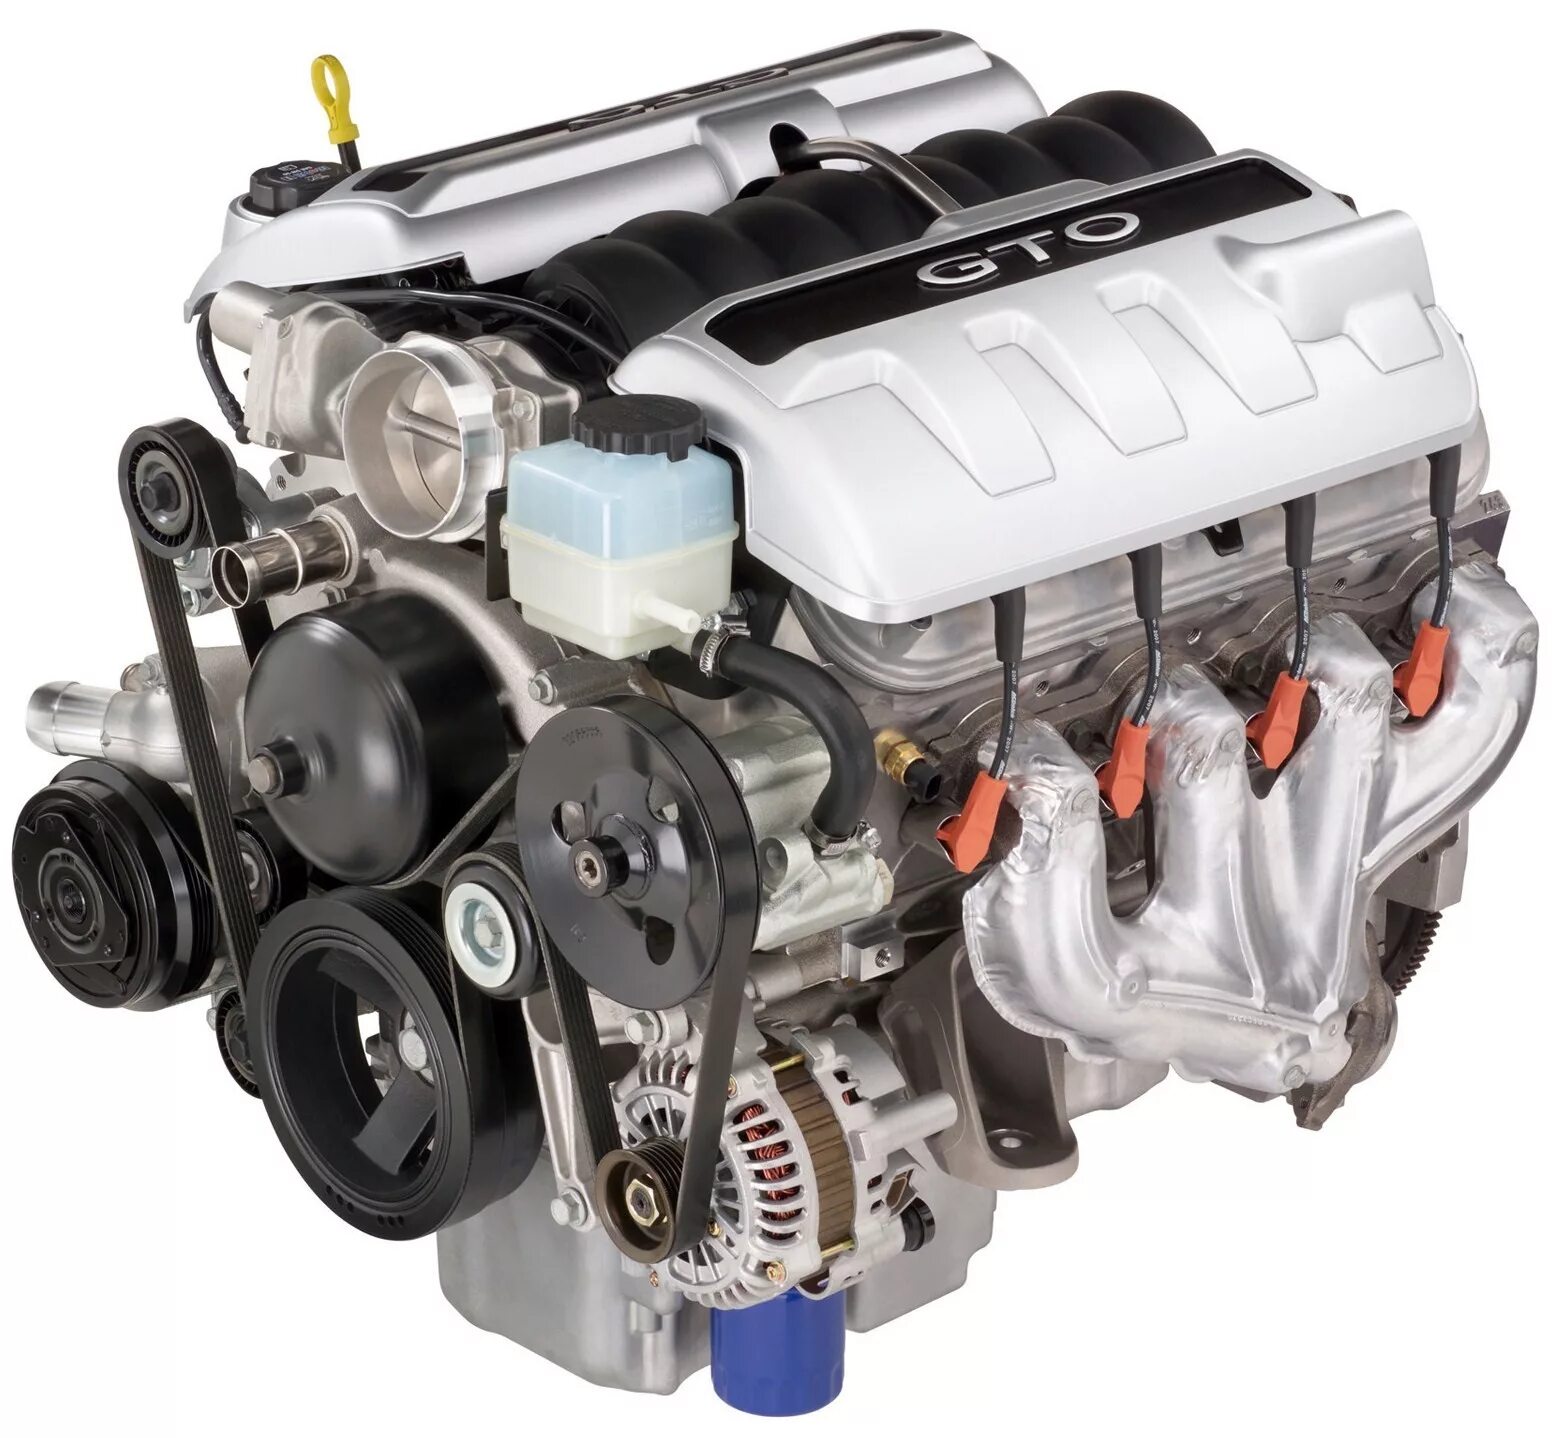 Chevrolet ls2 двигатель. Двигатель GM Chevrolet l98. Chevrolet 6,2 движок. Chevrolet ls2 engine.